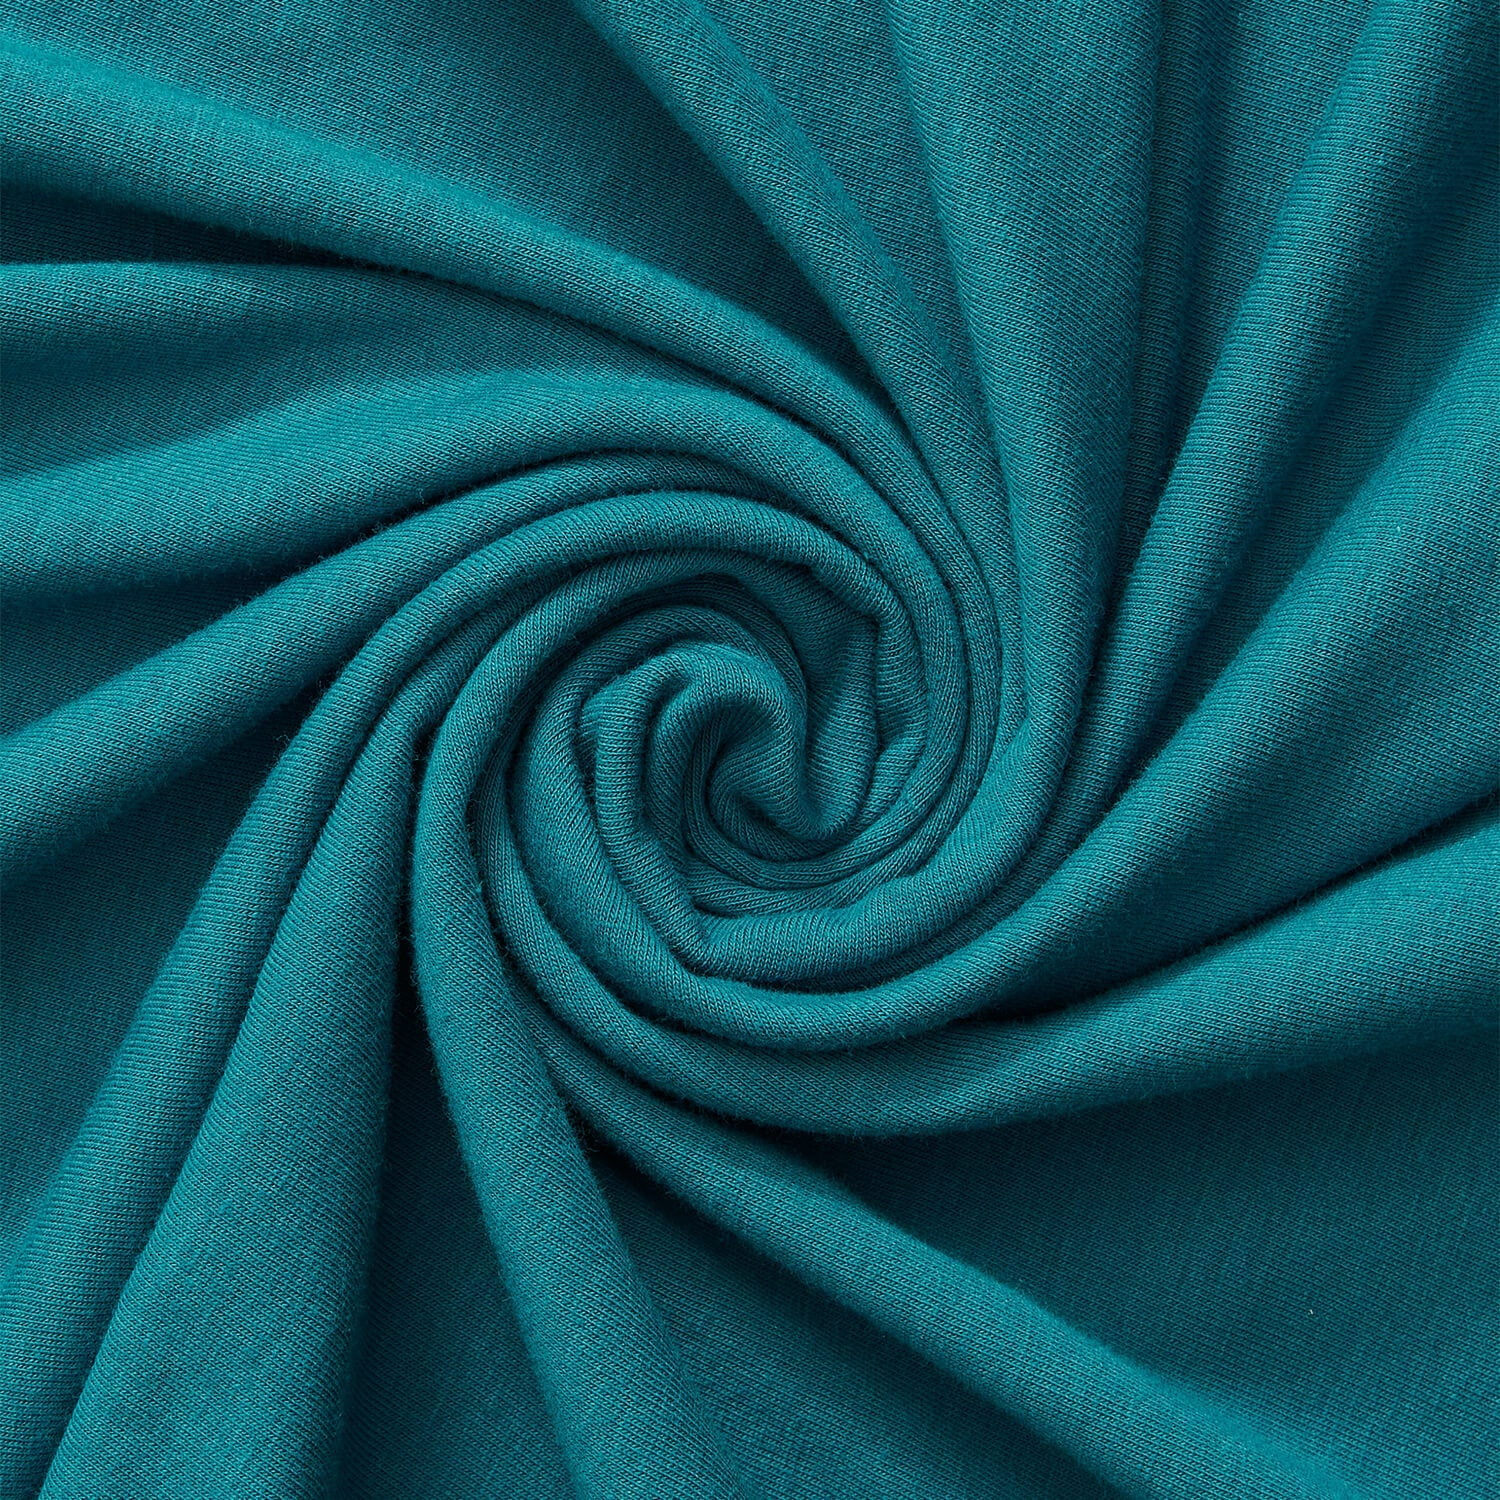 Cotton Jersey Lycra Spandex knit Stretch Fabric 58/60 wide (White